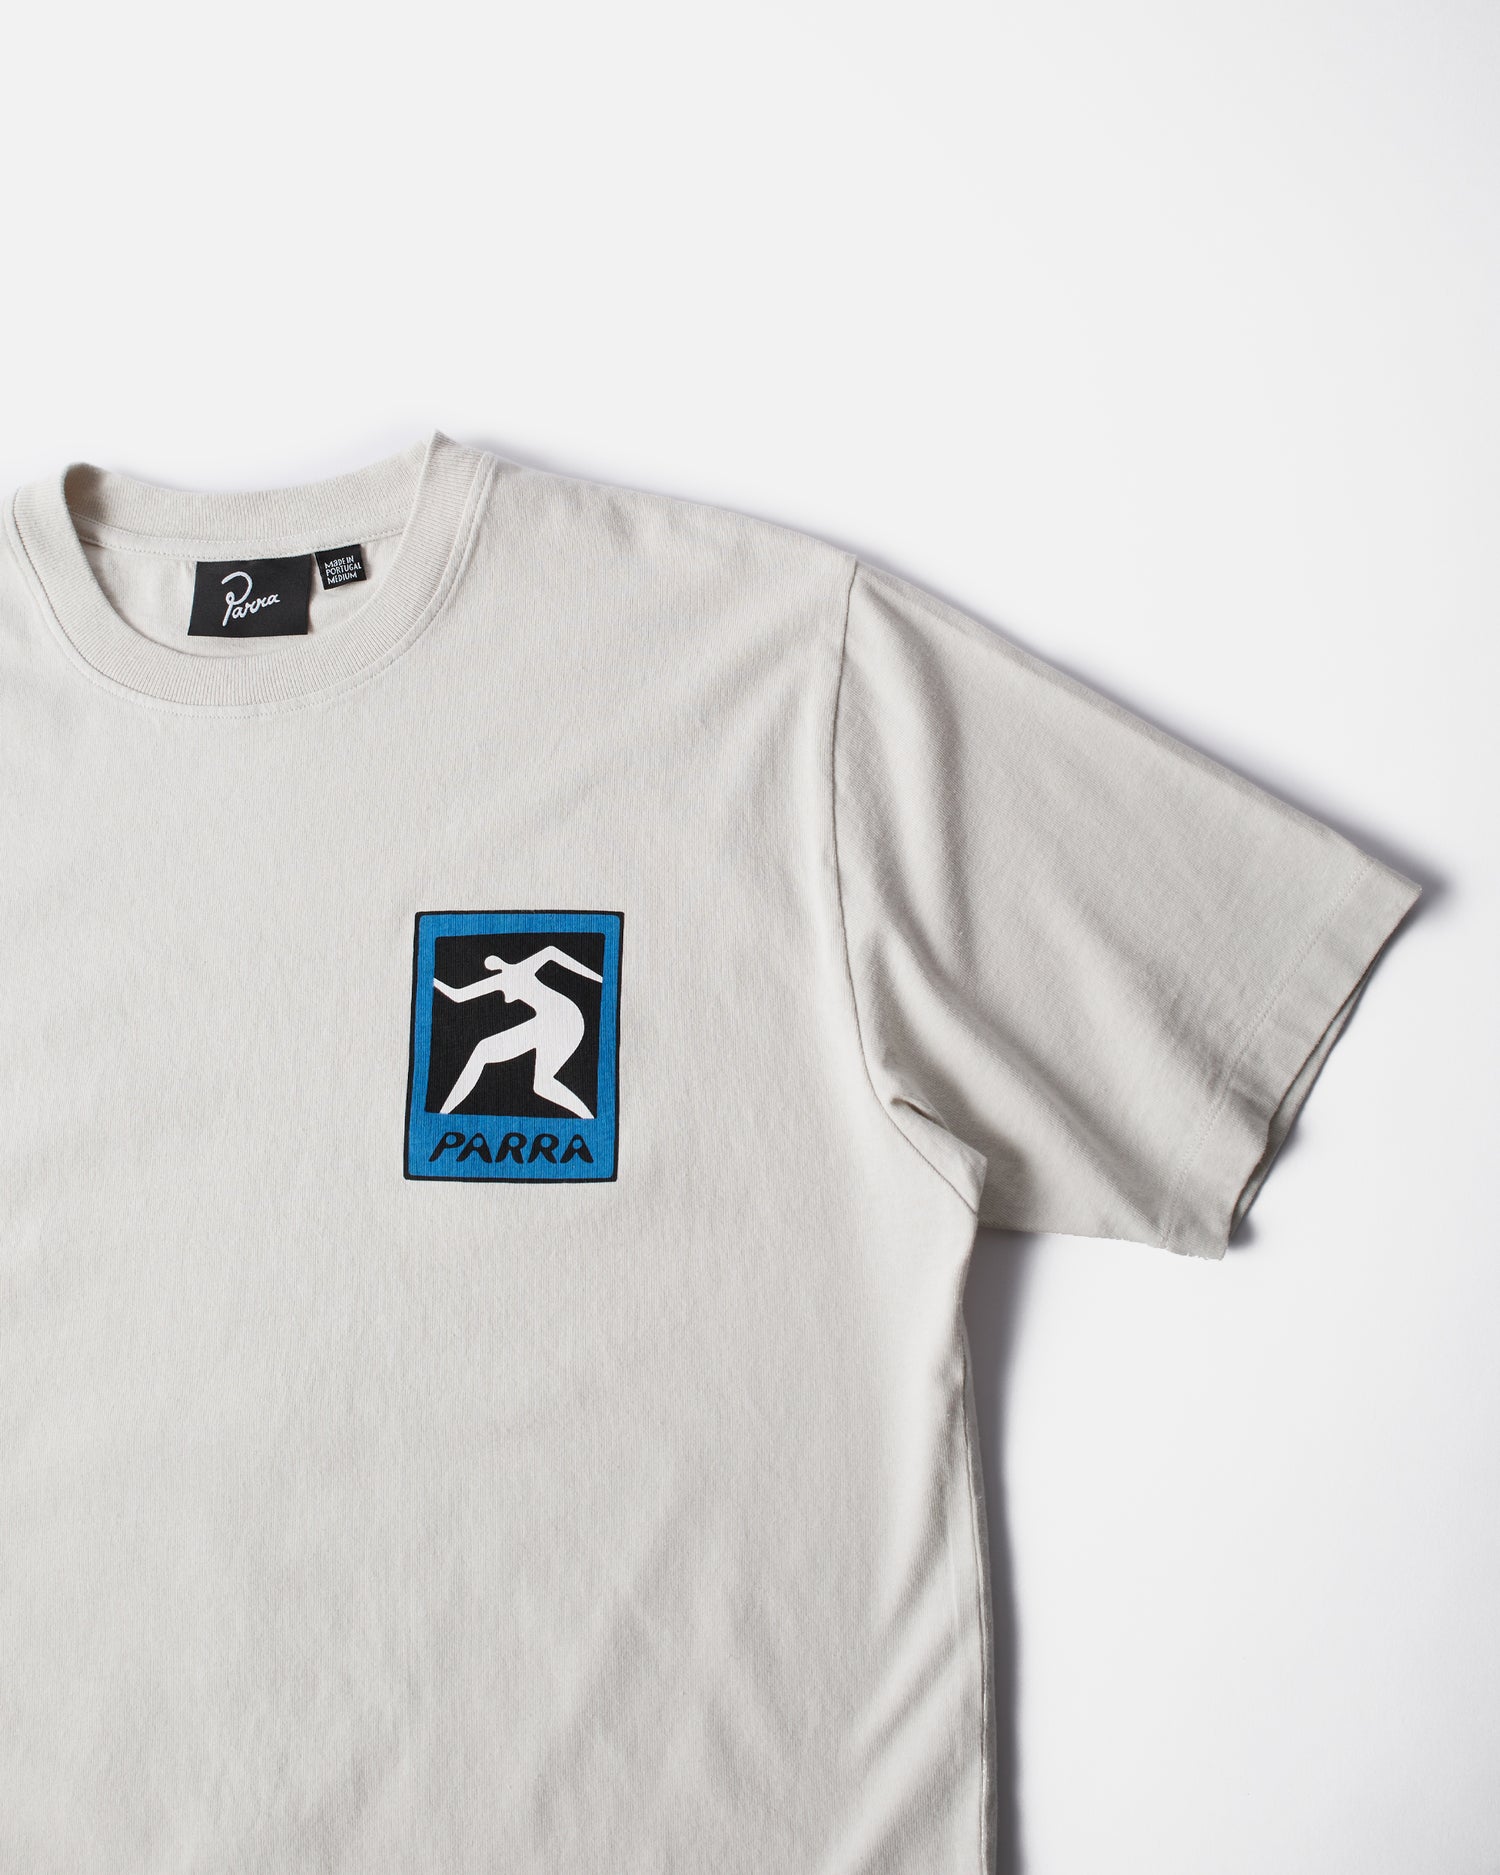 T-shirt byParra Pigeon Legs (grigio chiaro)